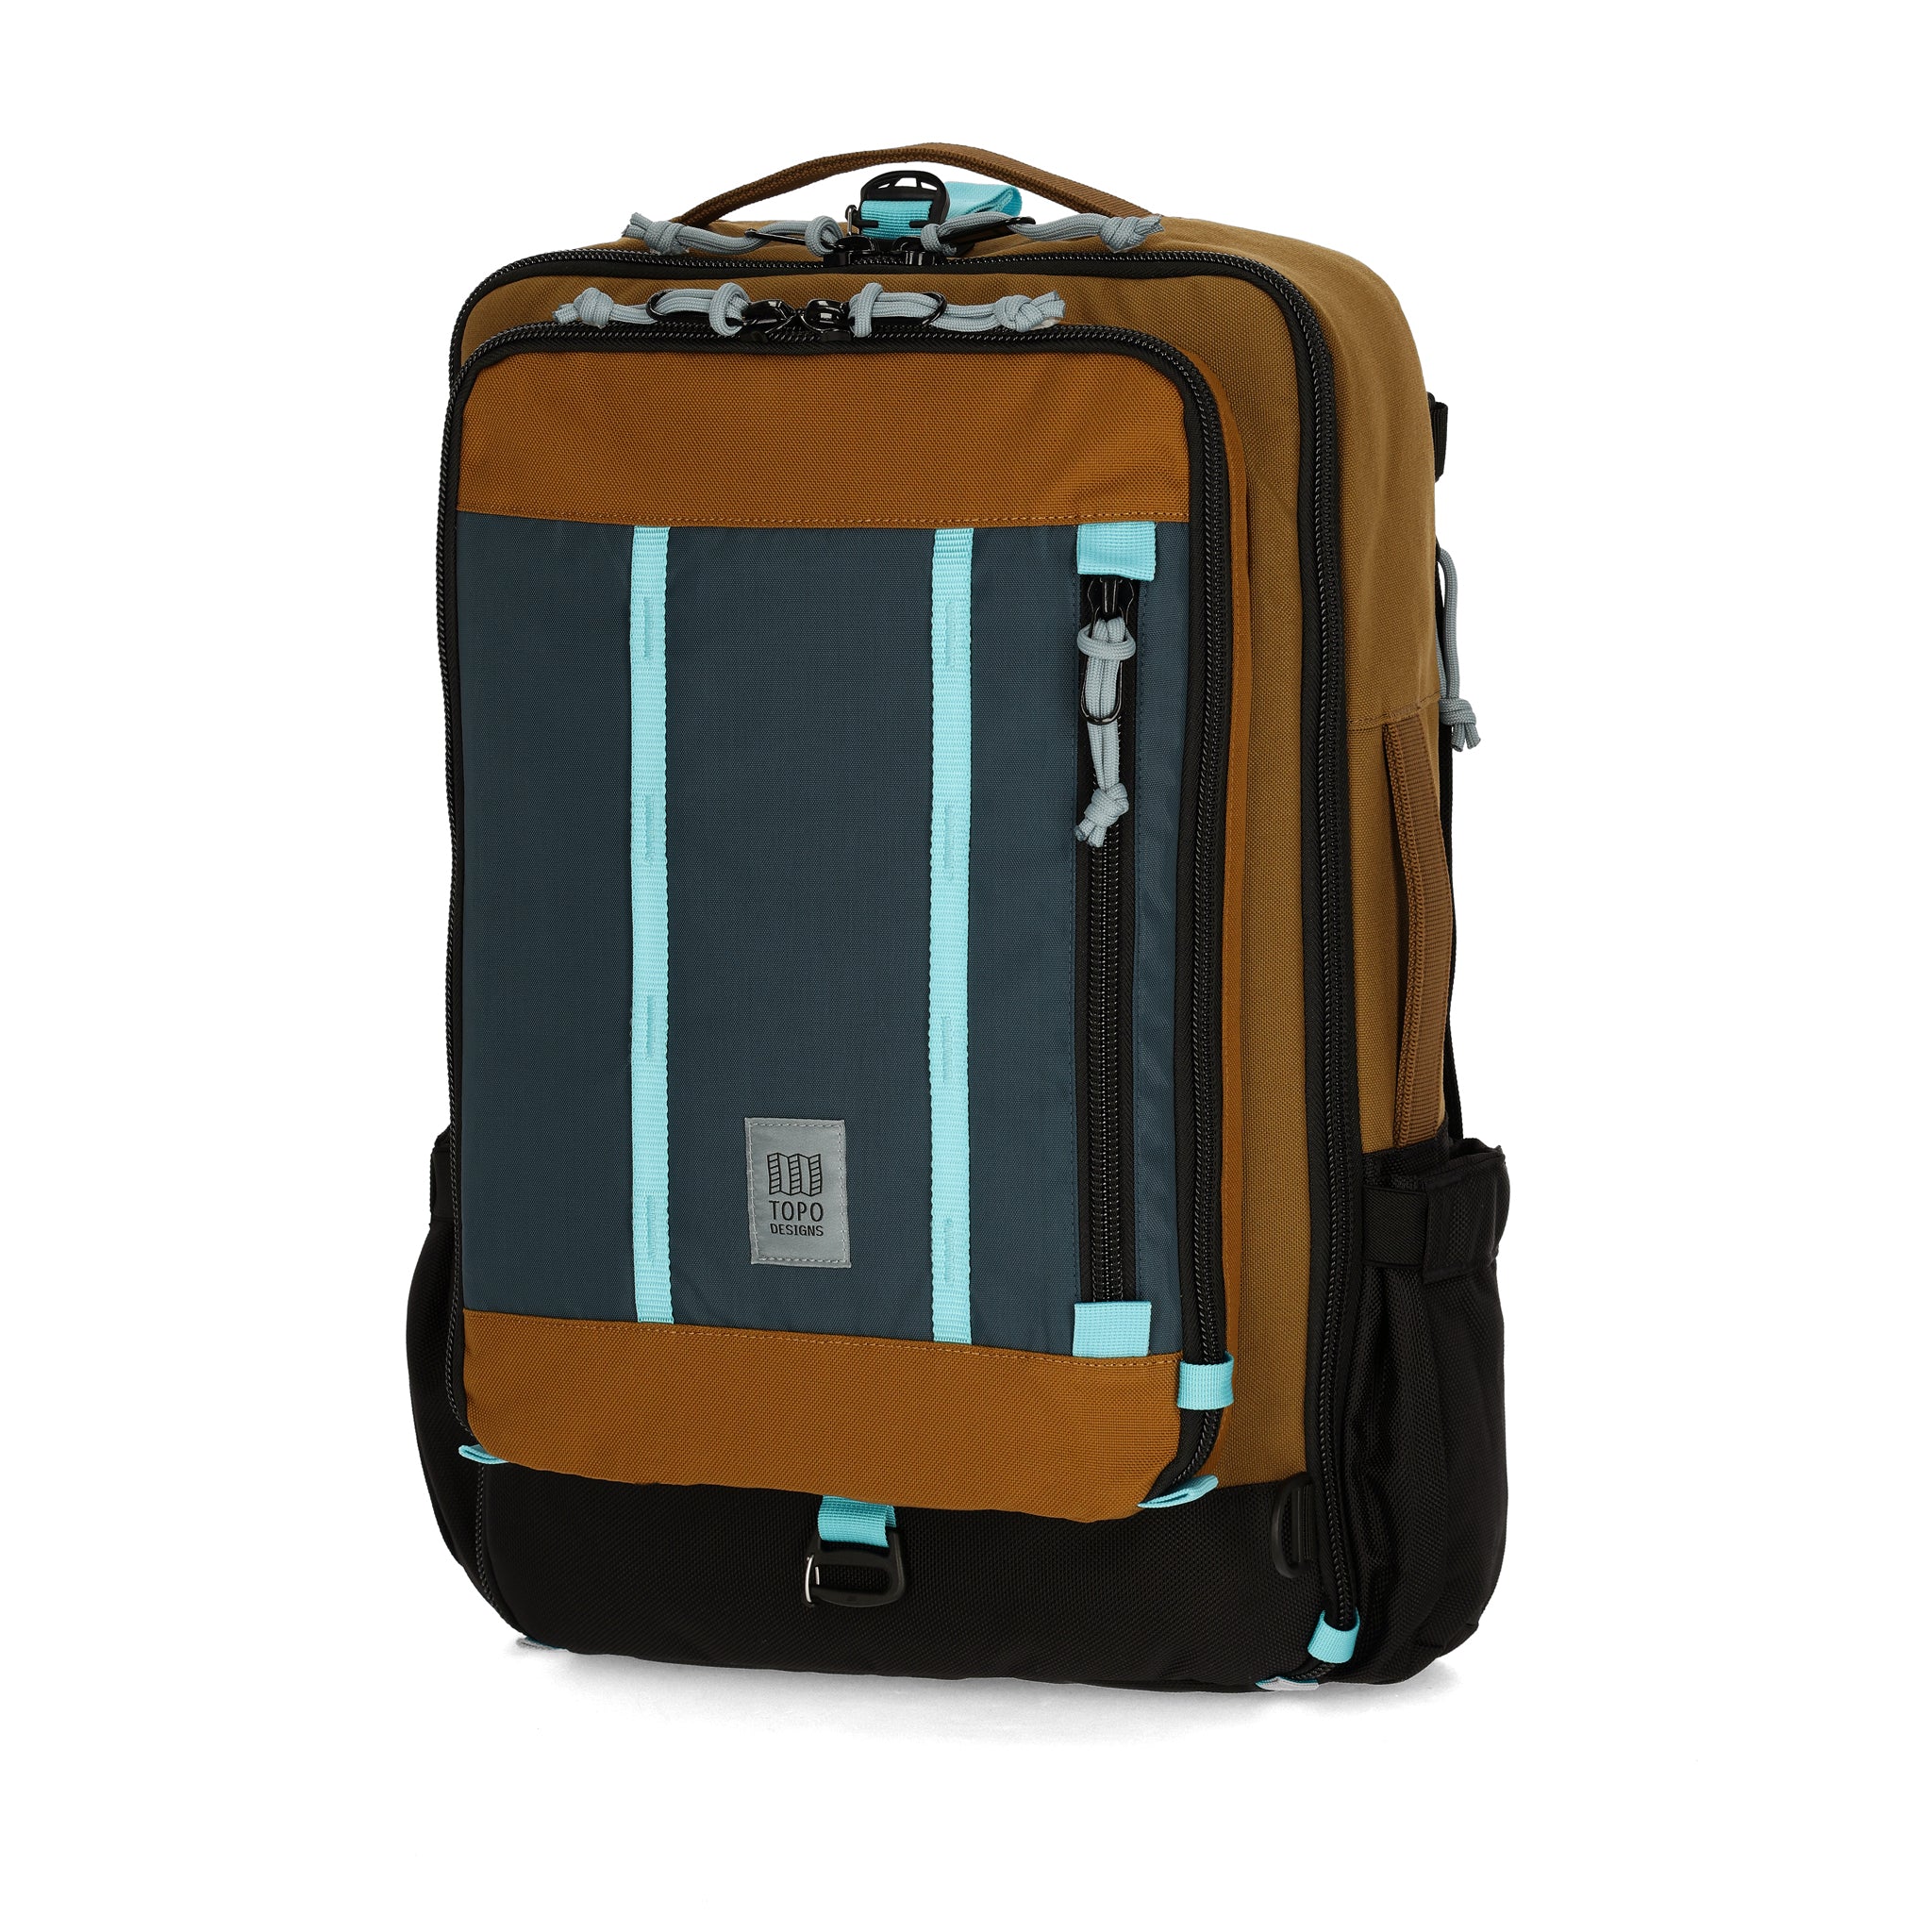 Buy Quality ballistic suitcase For International Travel 